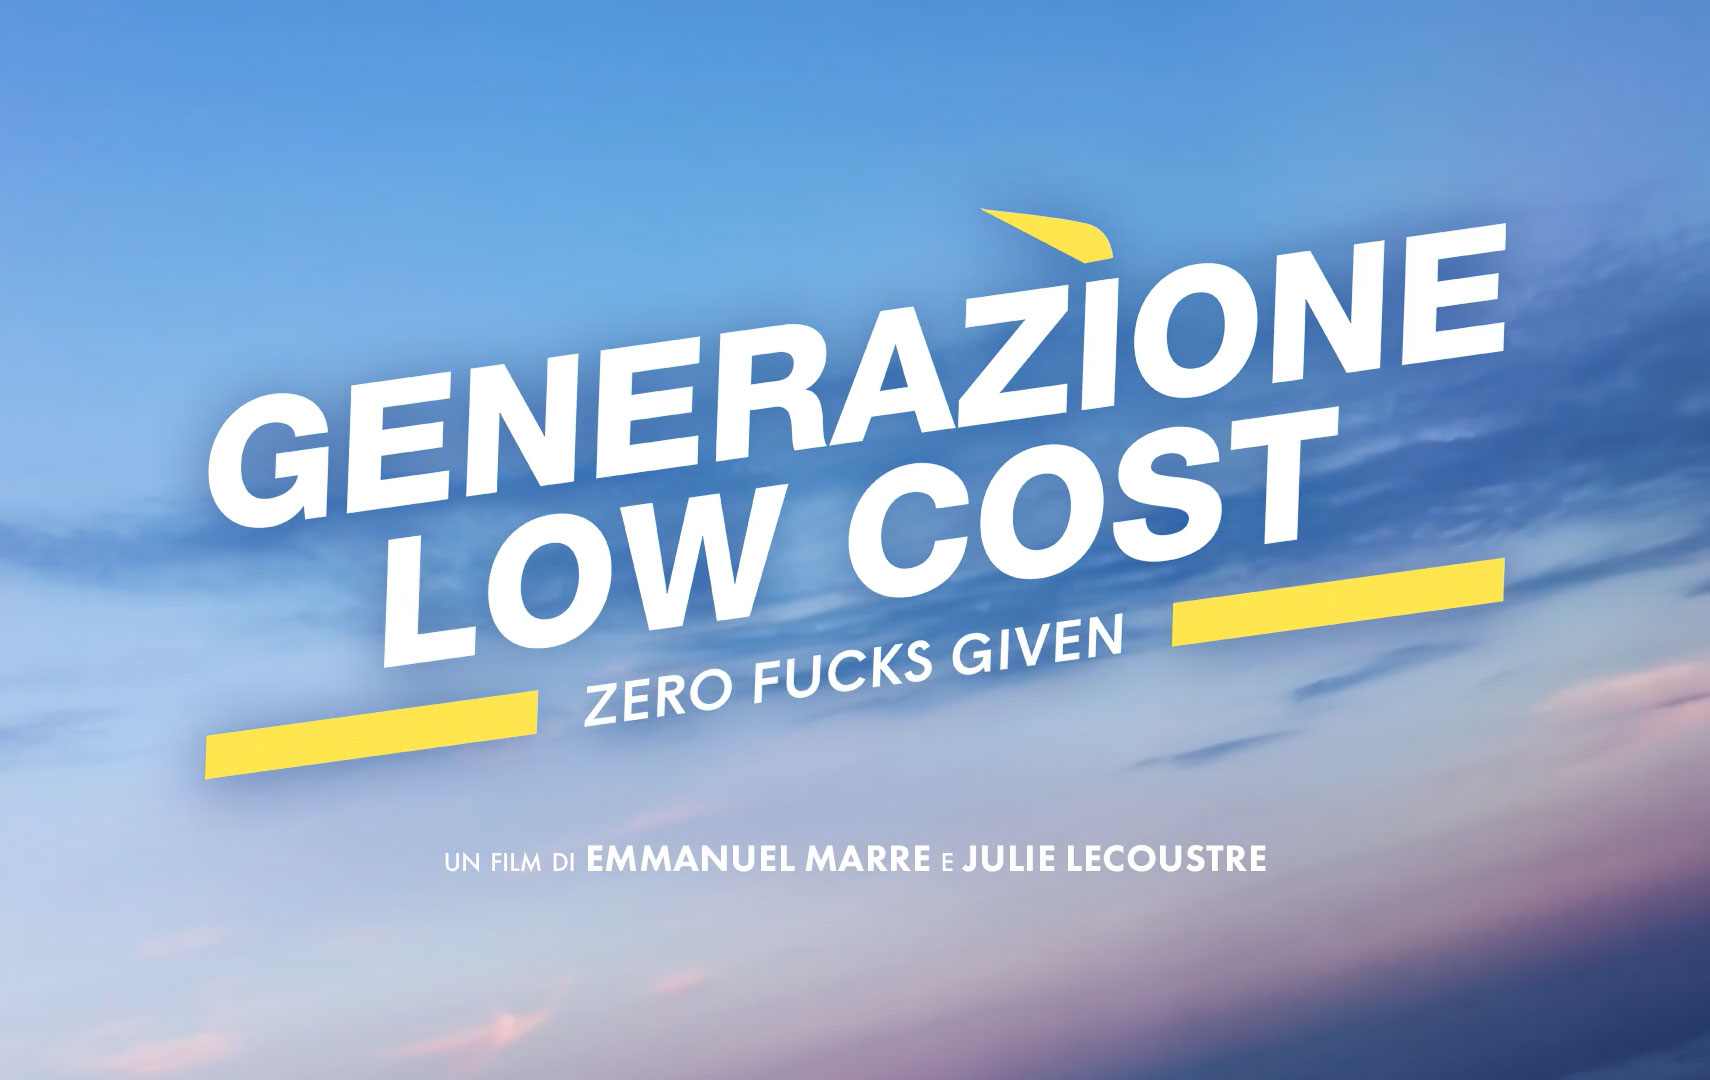 Generazione Low Cost, trailer film di Emmanuel Marre e Julie Lecoustre